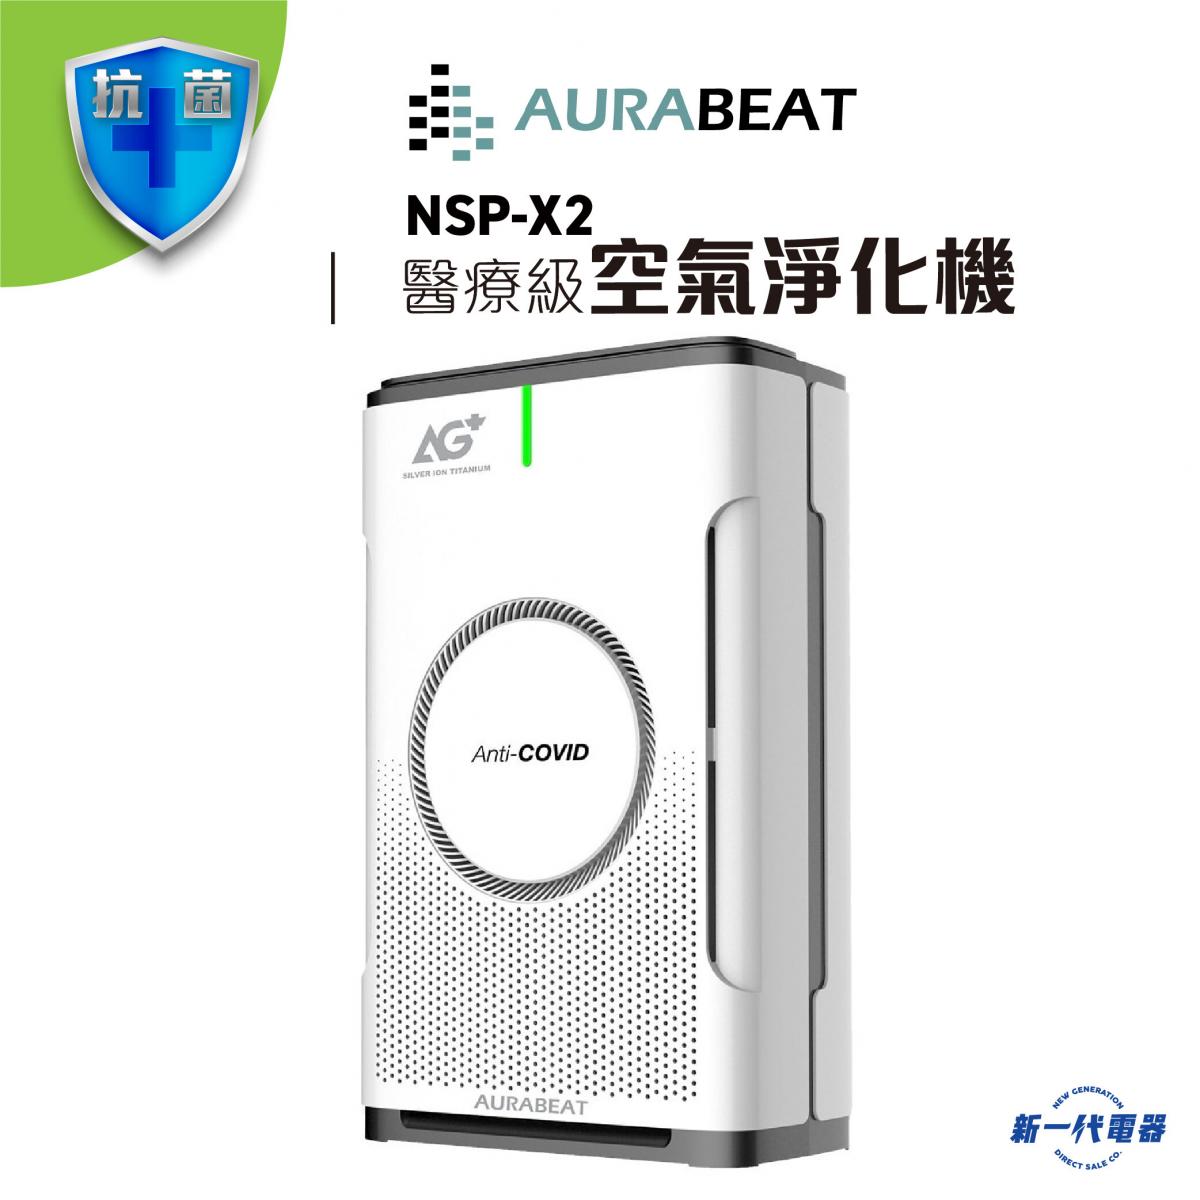 Aurabeat | NSP-X2 AG+ Pro 銀離子抗病毒空氣淨化機| HKTVmall 香港最大網購平台